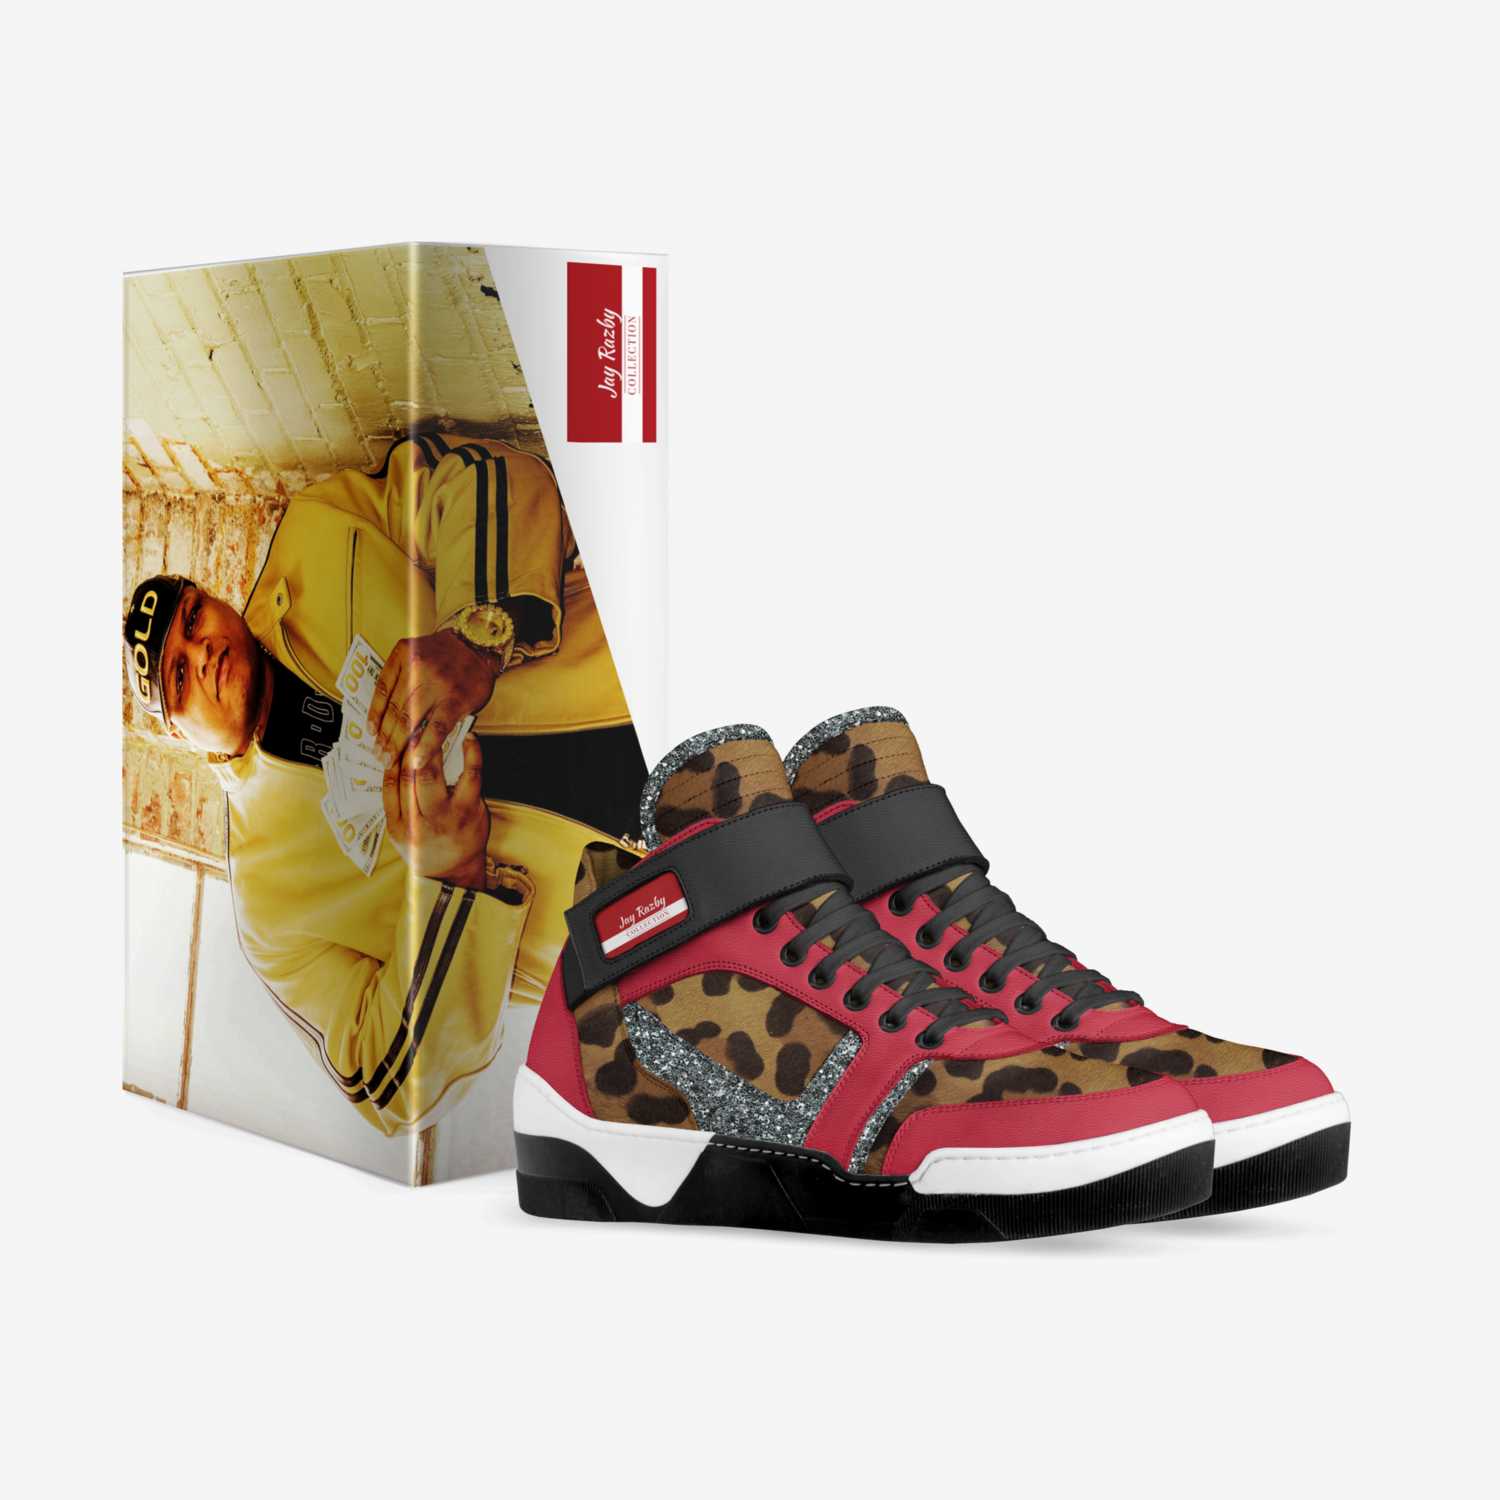 Jay Razby custom made in Italy shoes by Jay Rock | Box view